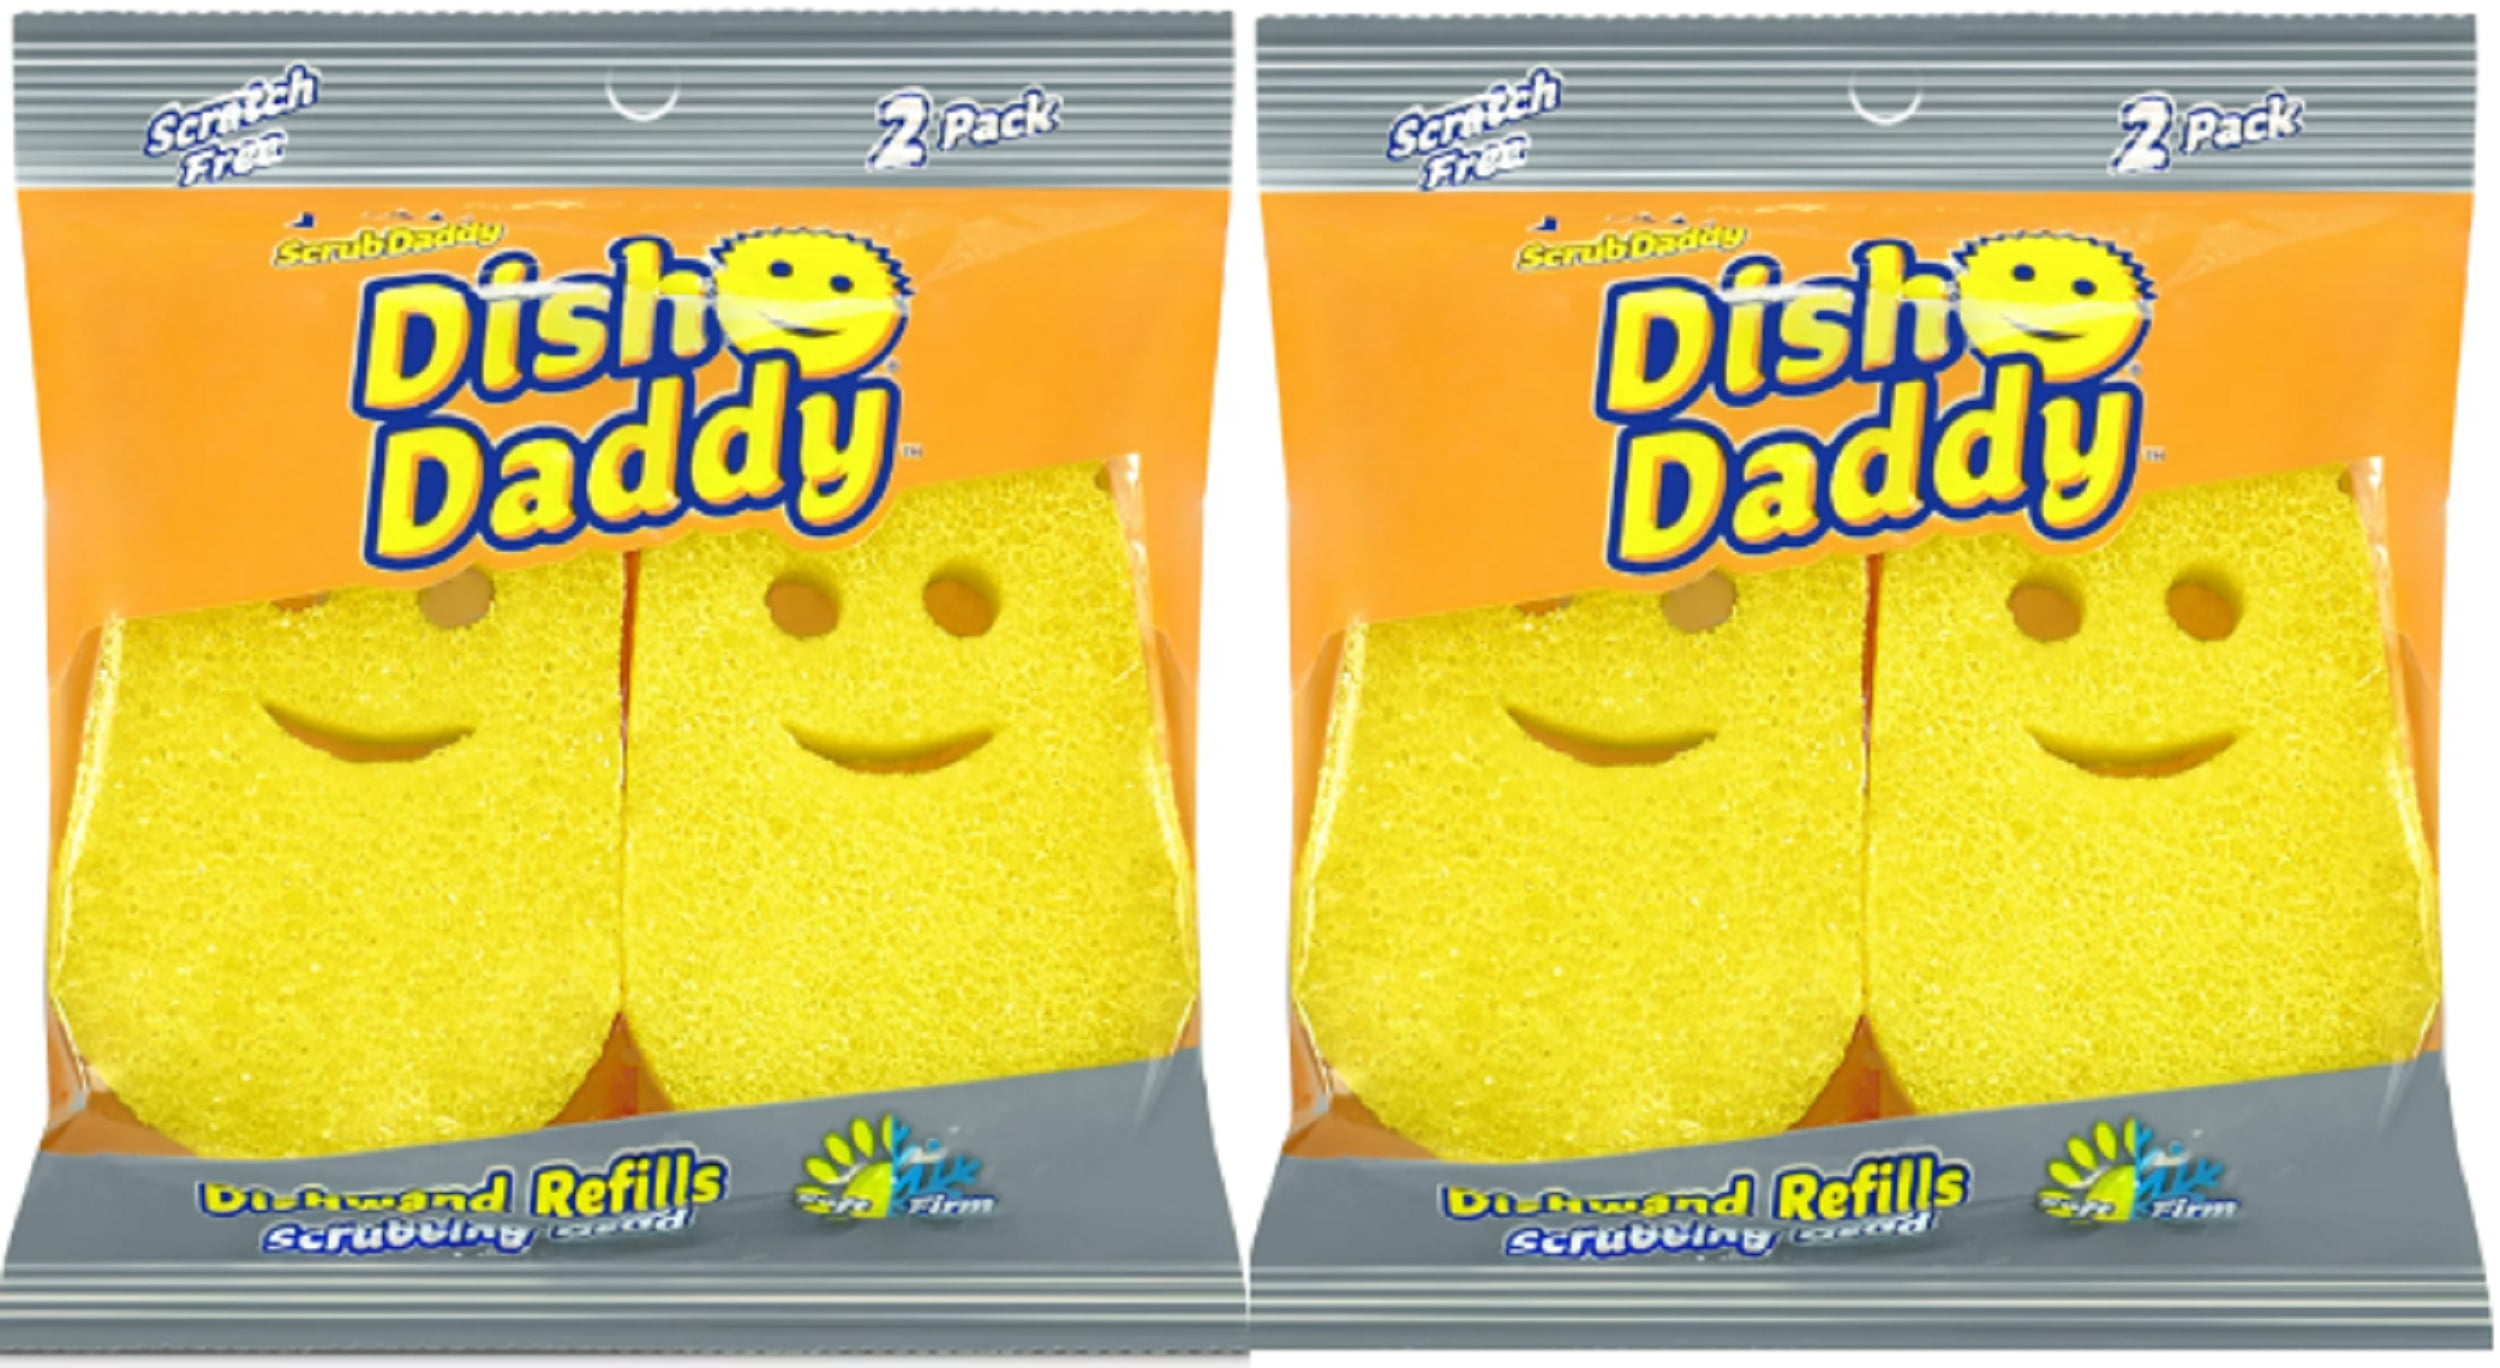 Dish Daddy